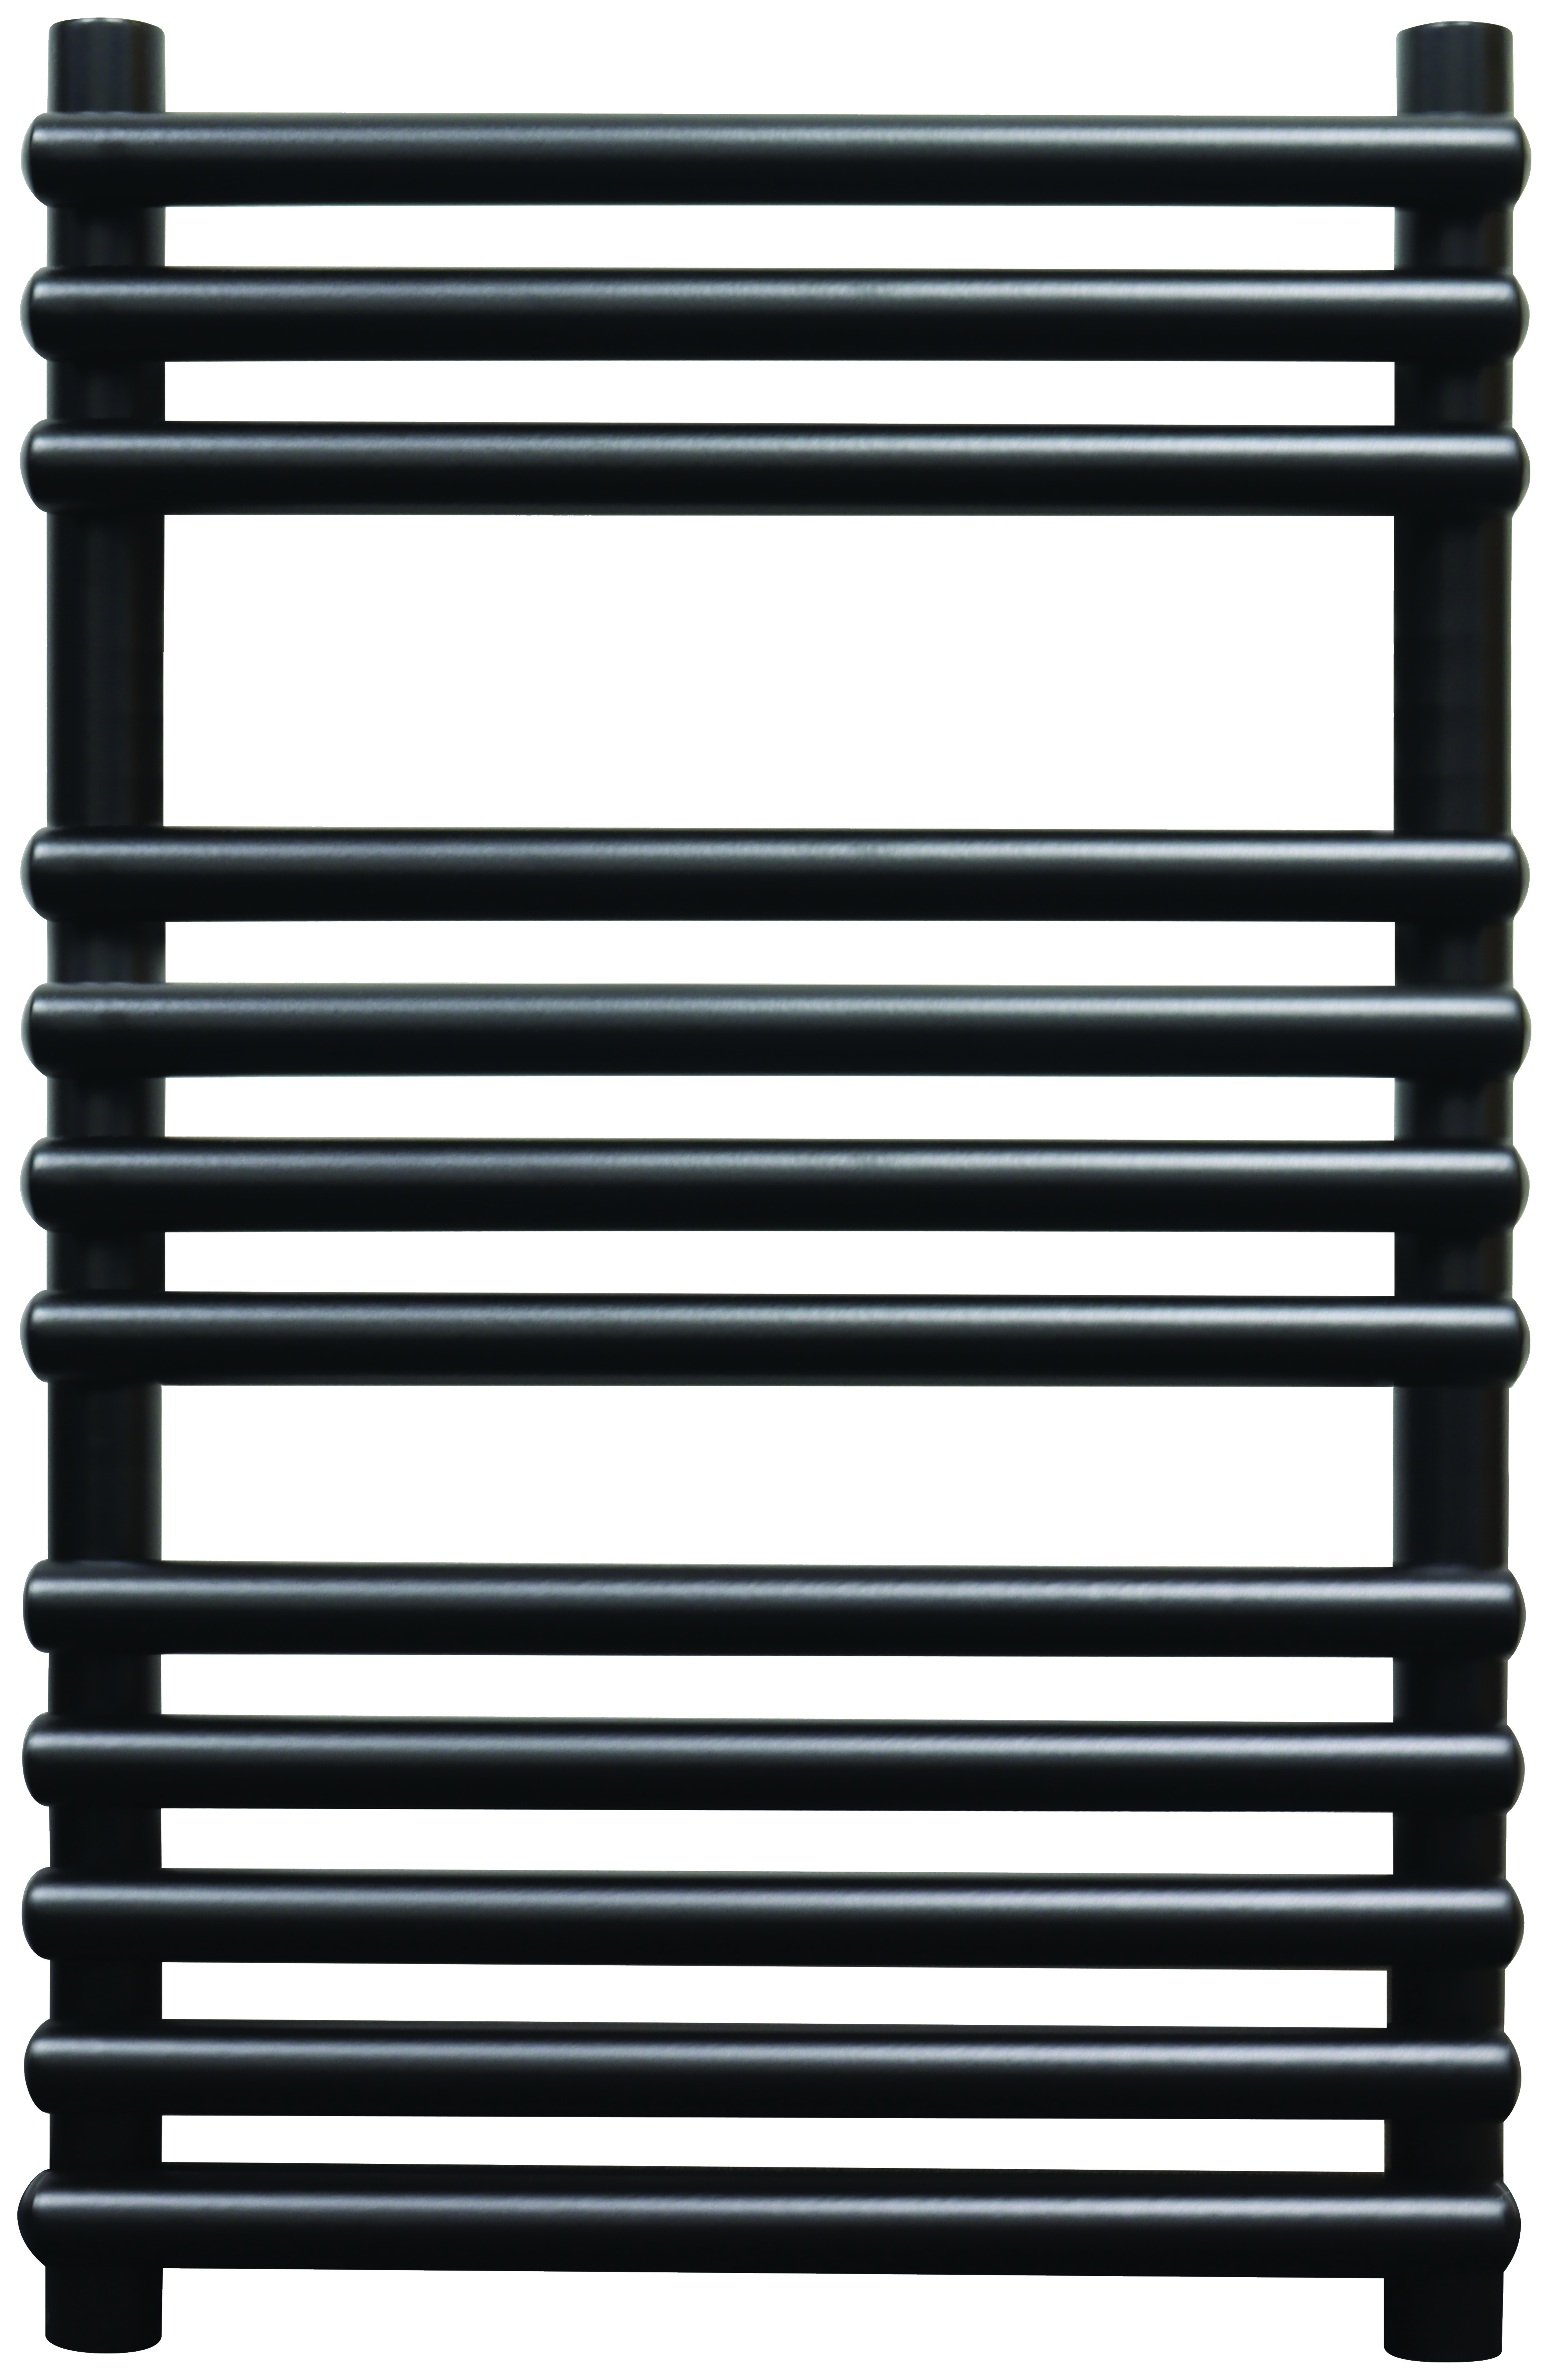 Towelrads Double Iridio Matt Black Towel Radiator - 1800 x 500mm